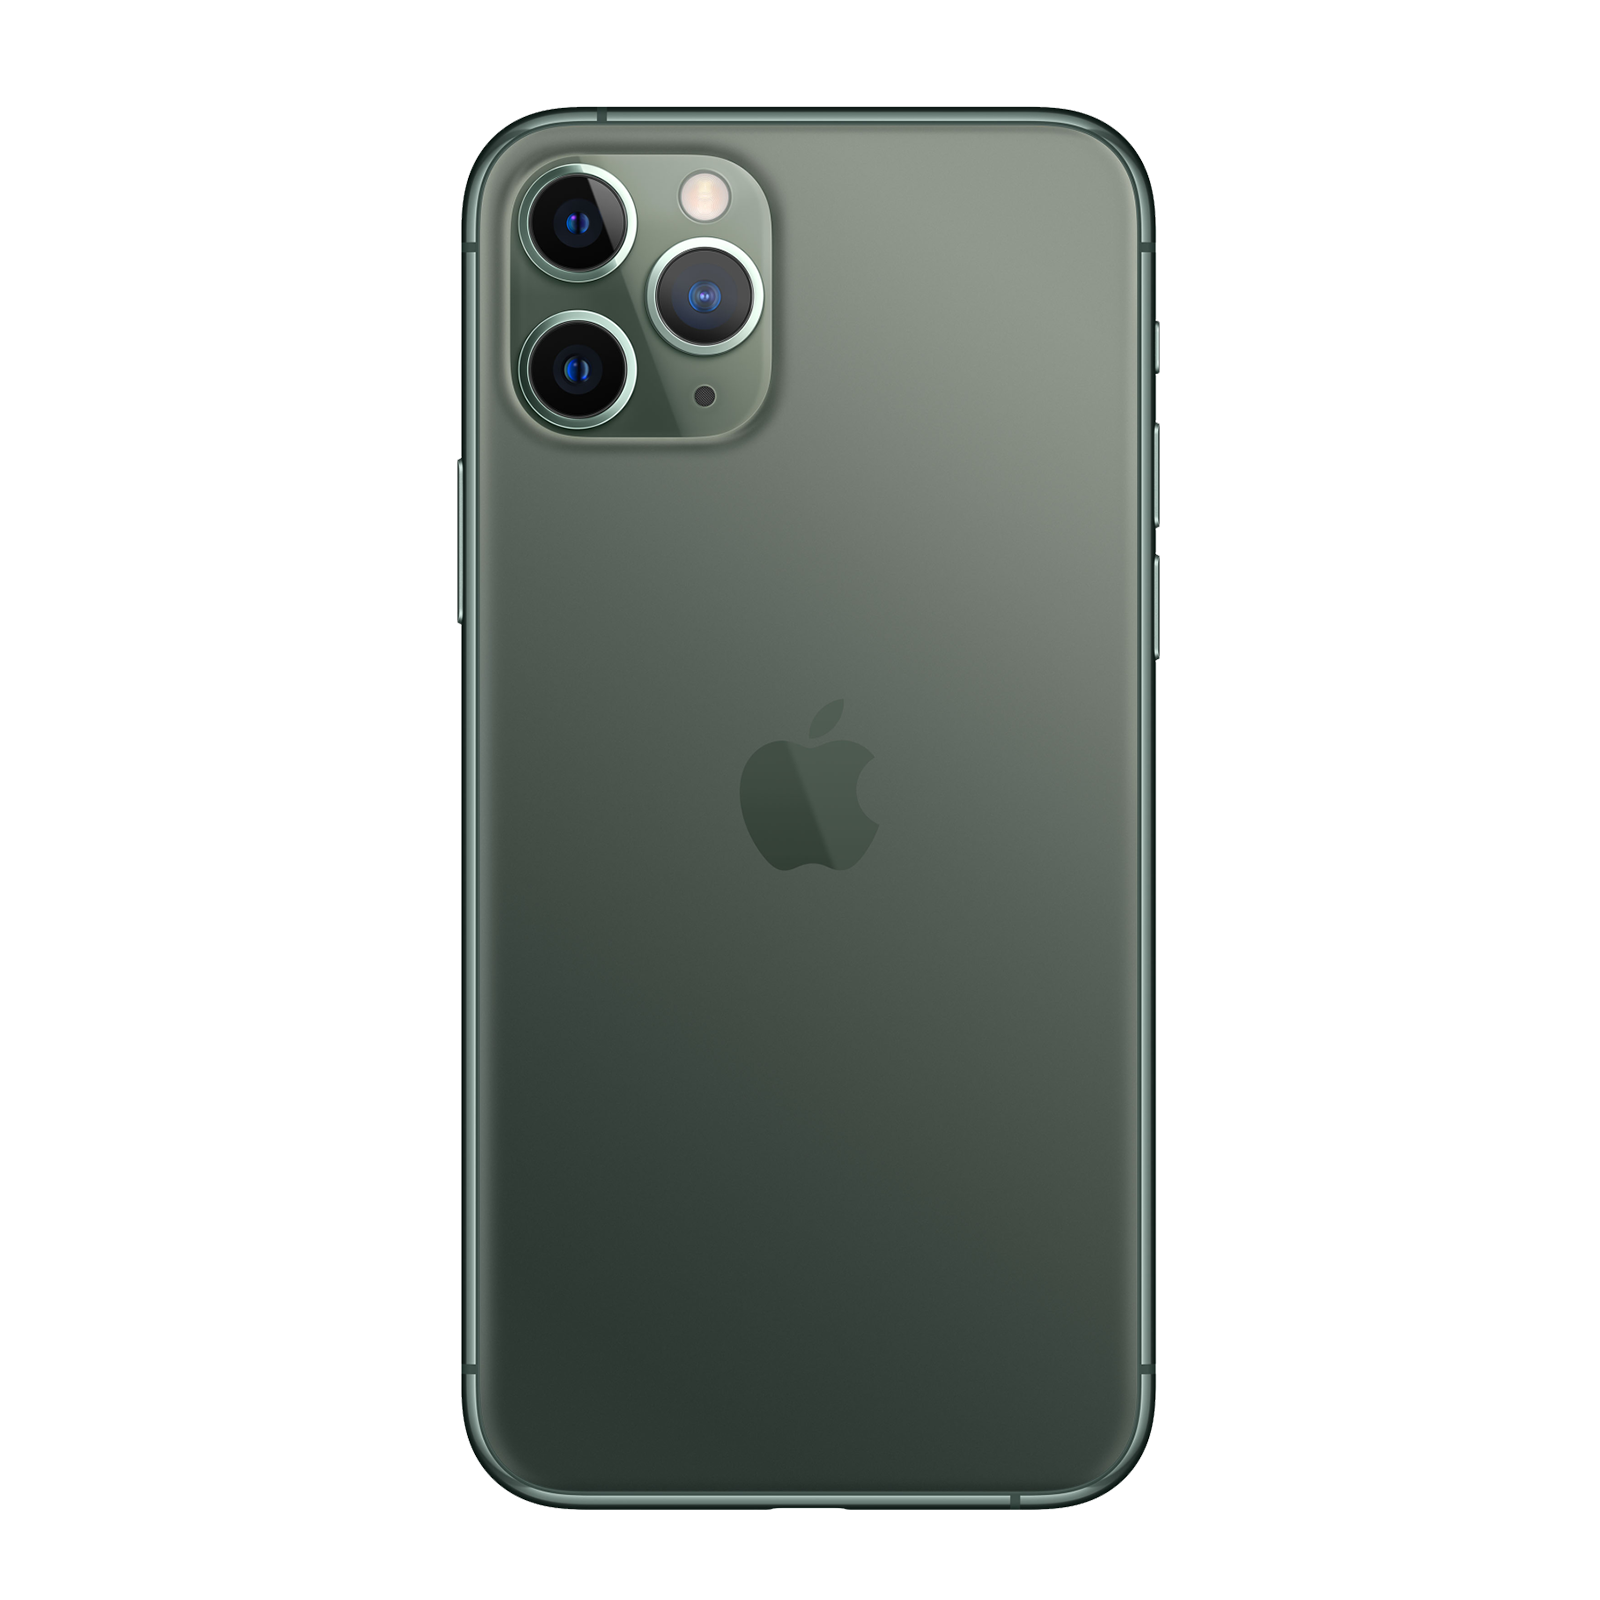 iPhone 11 Pro 512GB Midnight Green Very Good Unlocked - New Battery